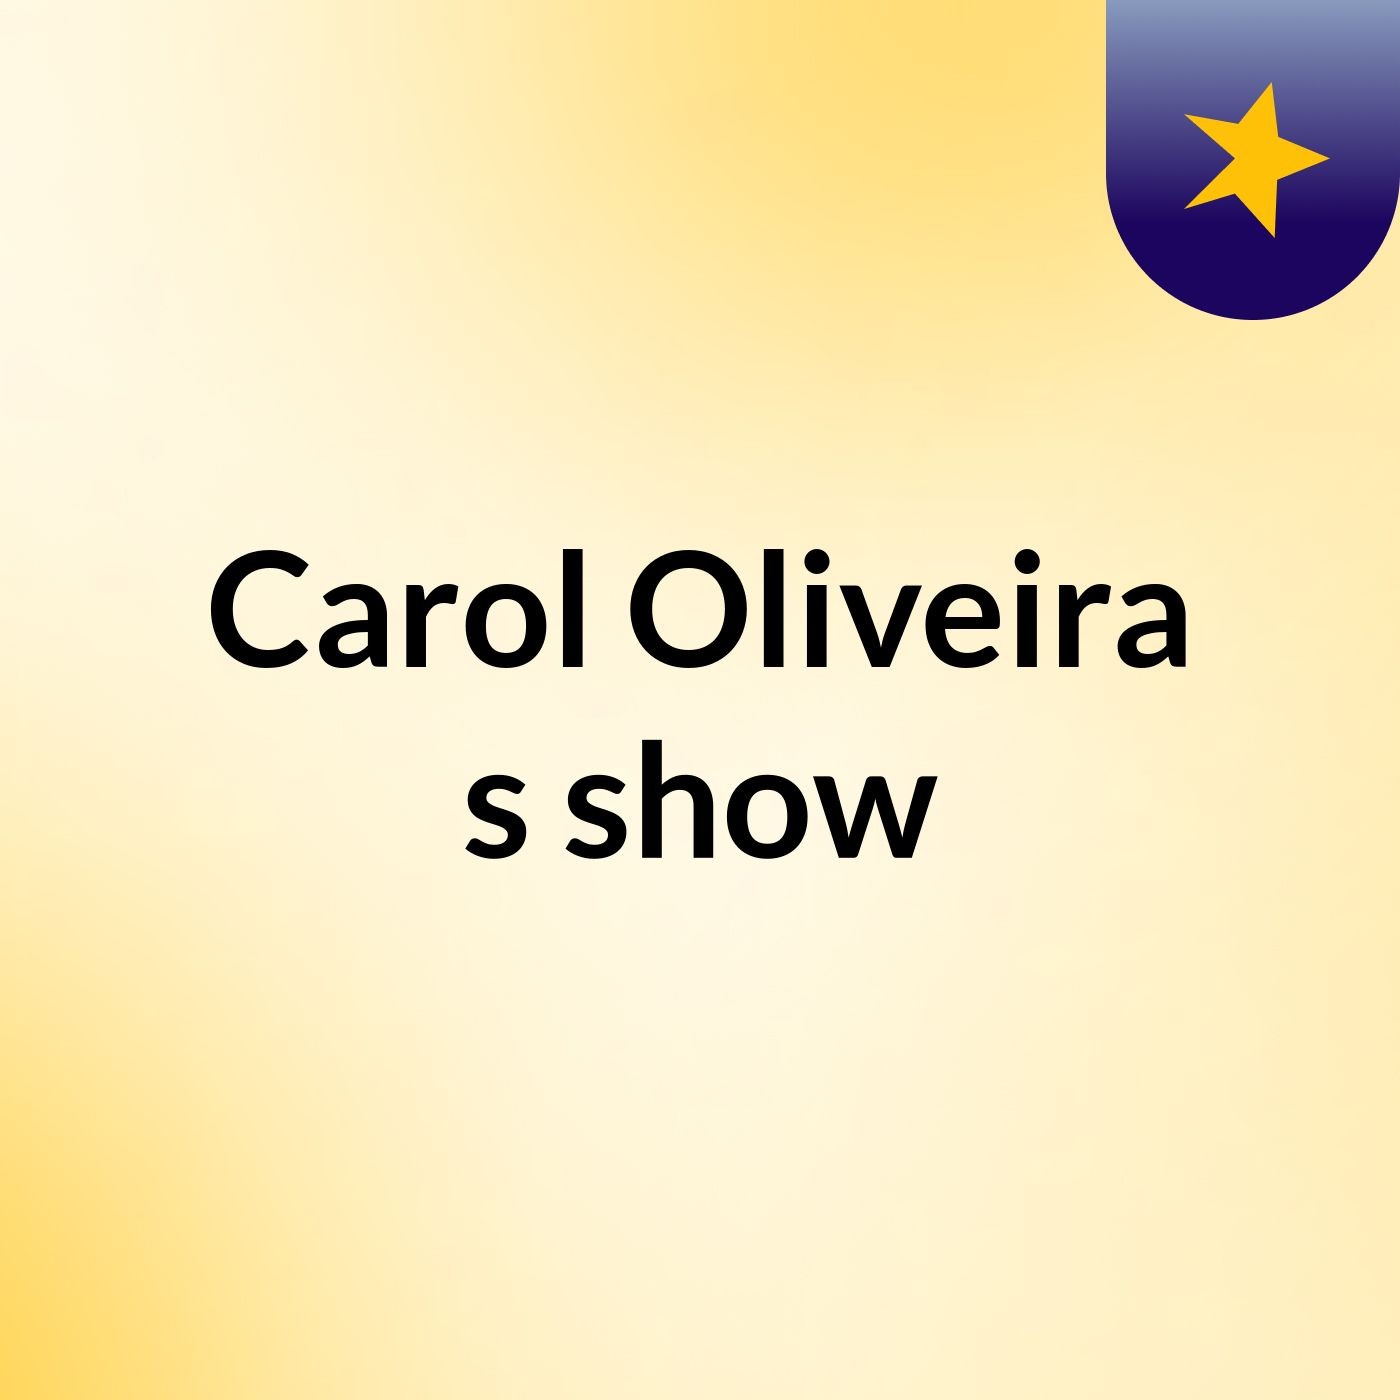 Carol Oliveira's show